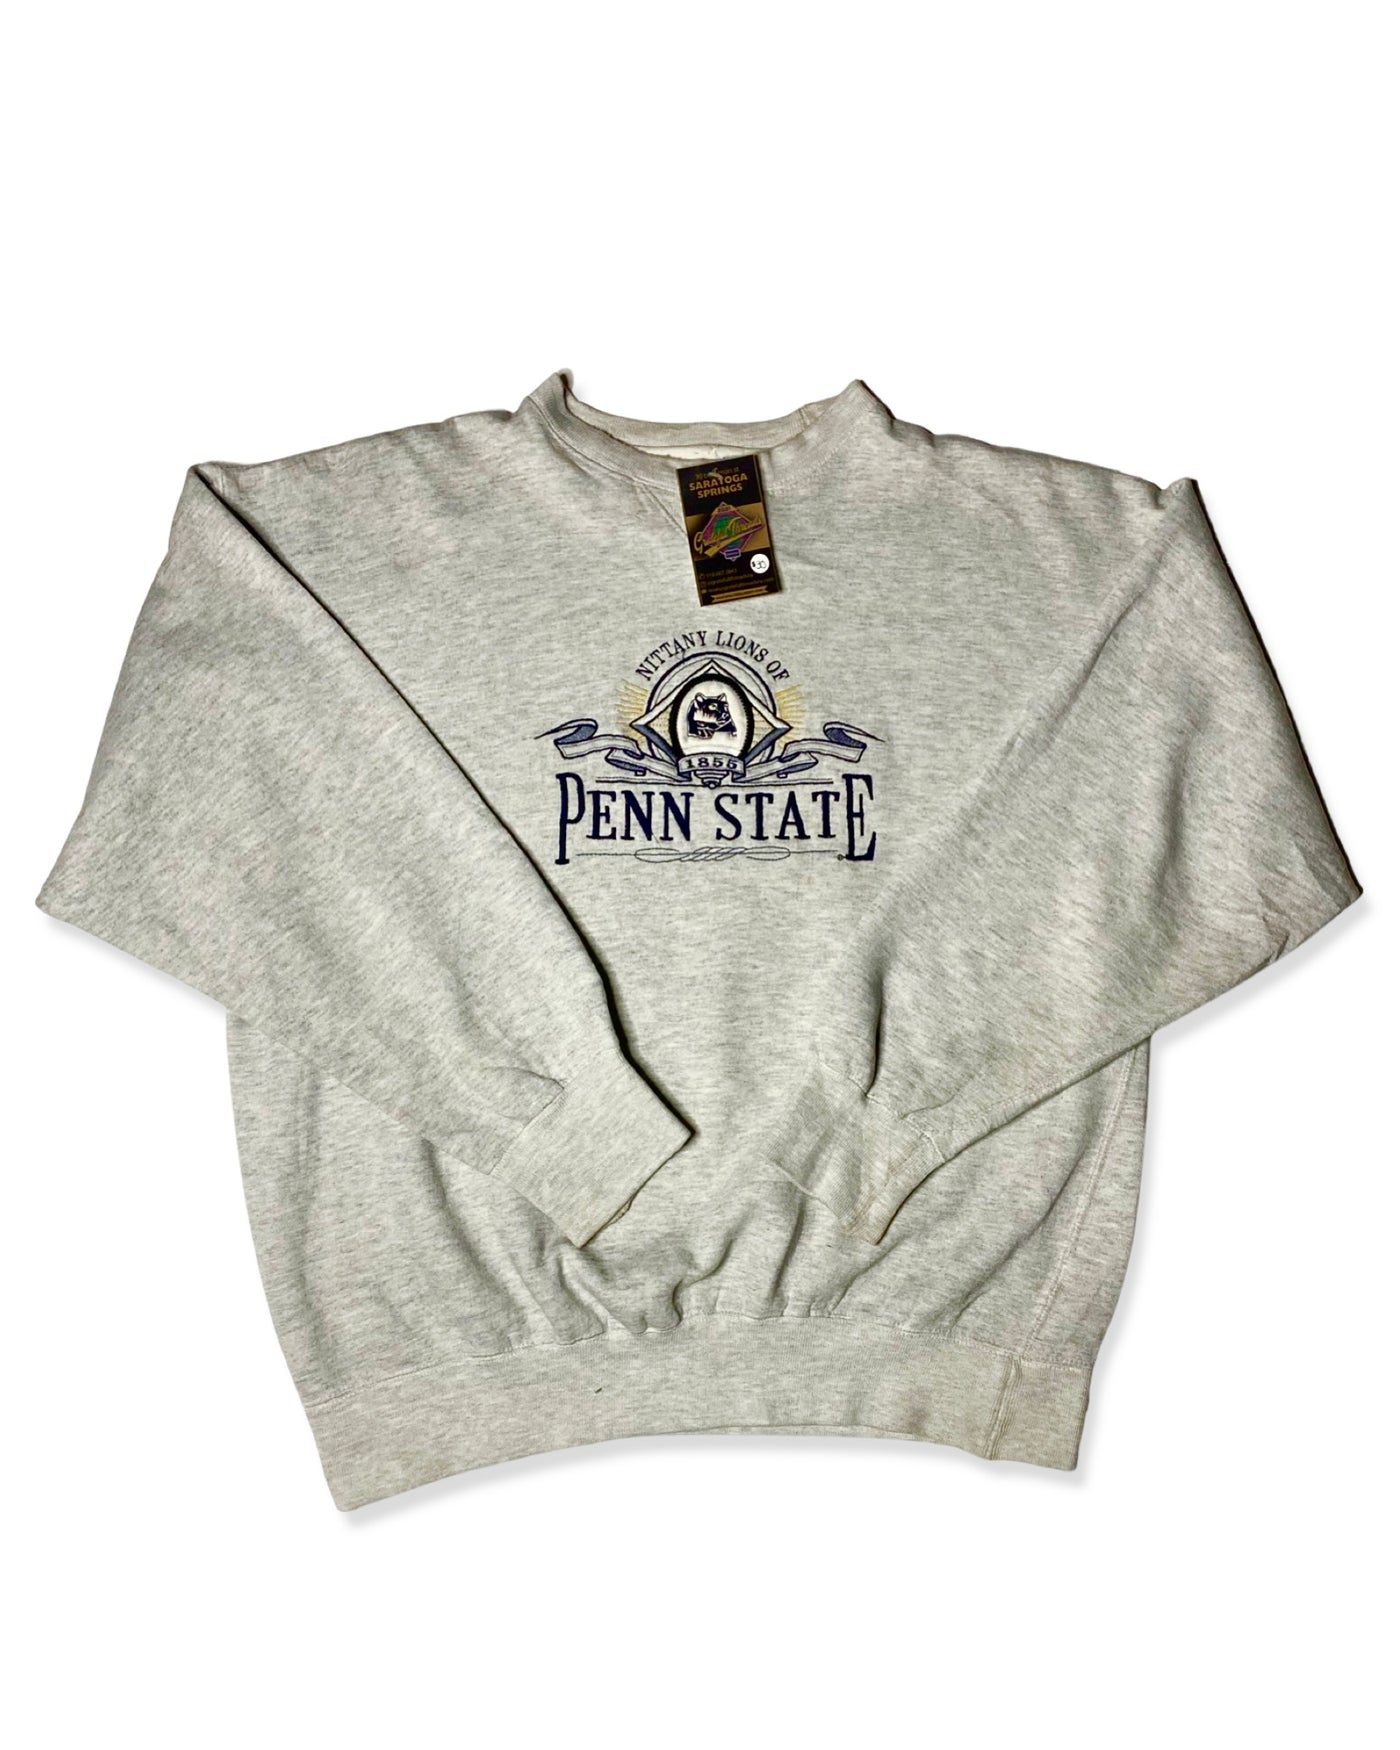 Vintage 90s Penn State Embroidered Crewneck